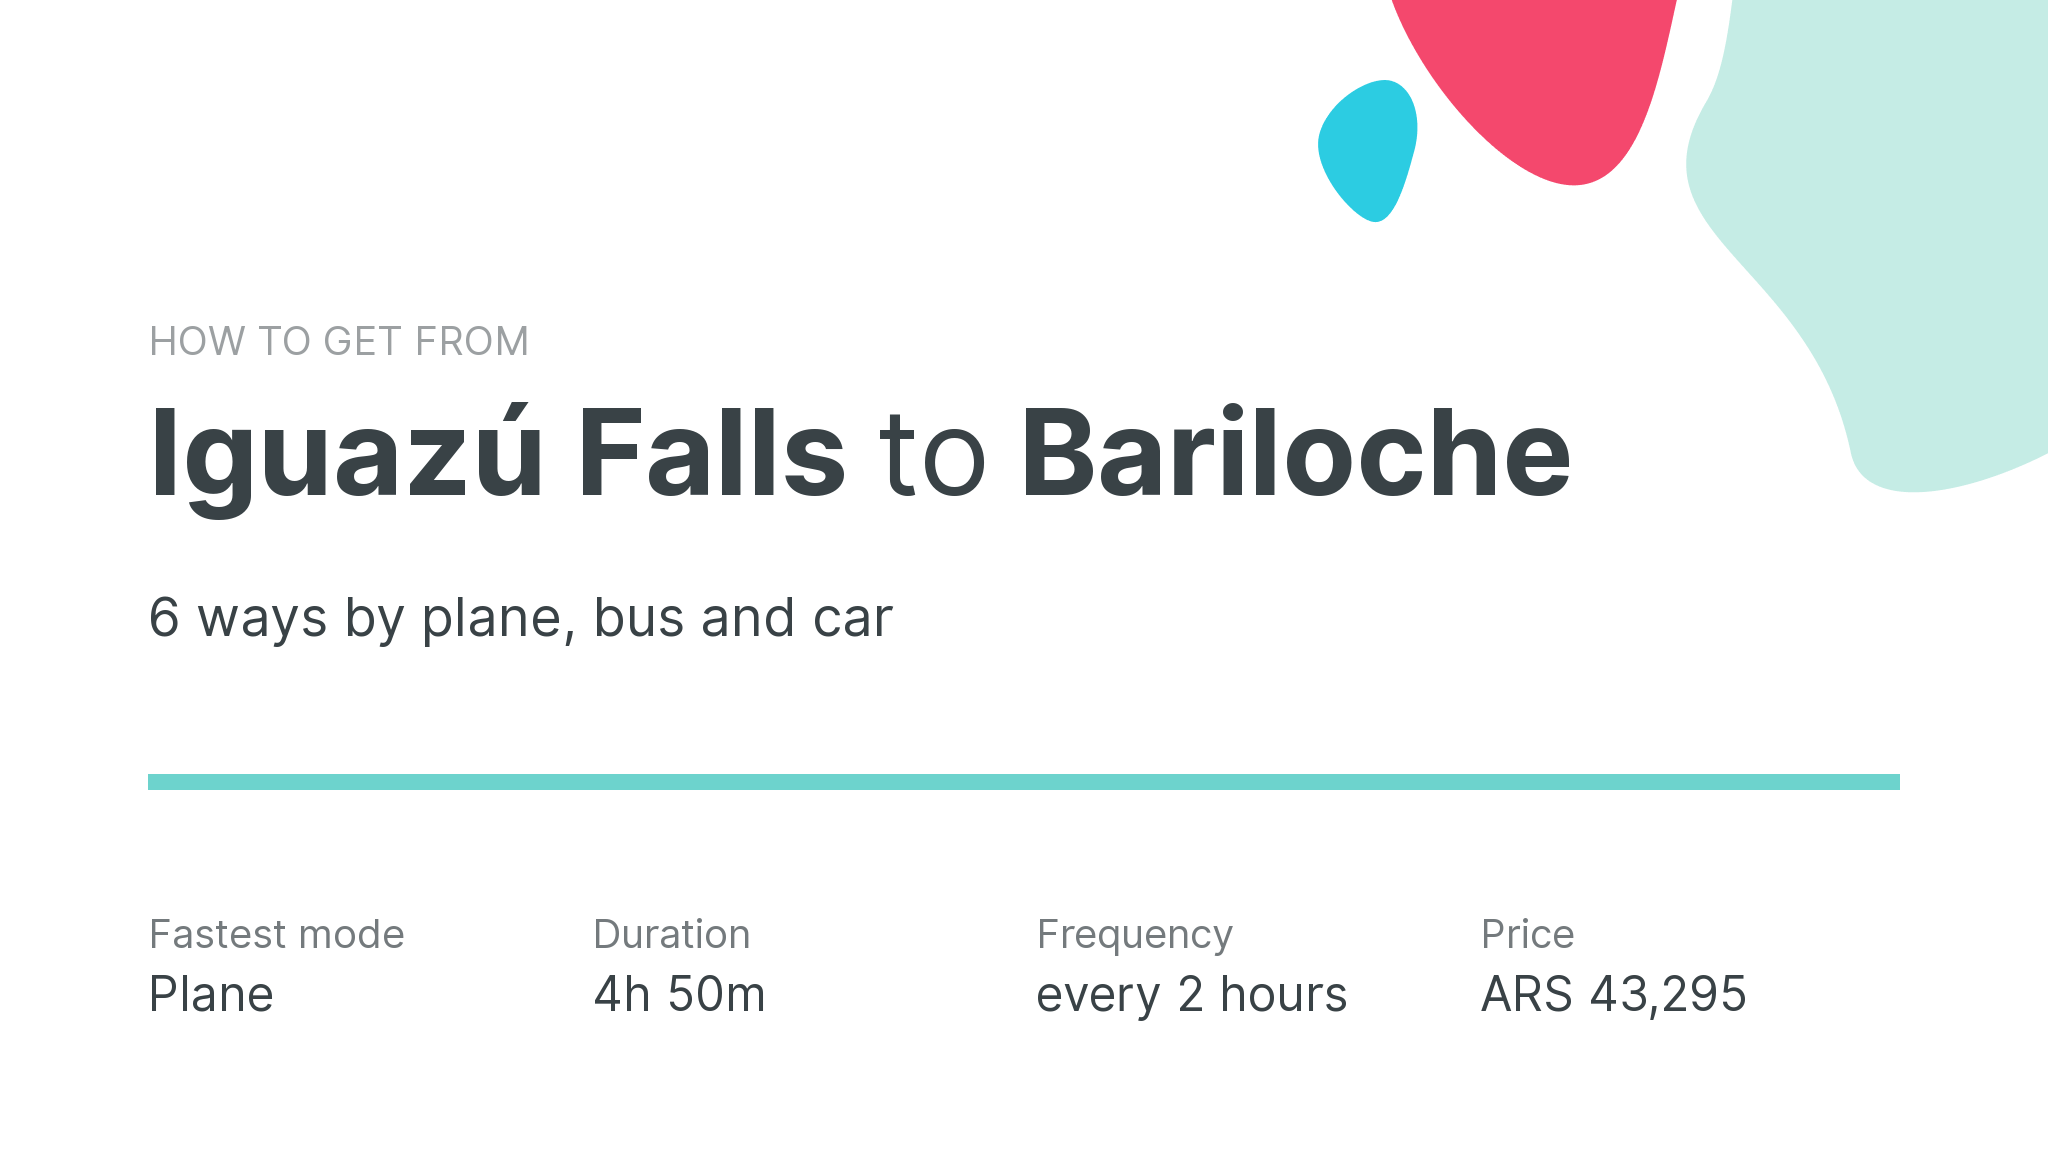 How do I get from Iguazú Falls to Bariloche